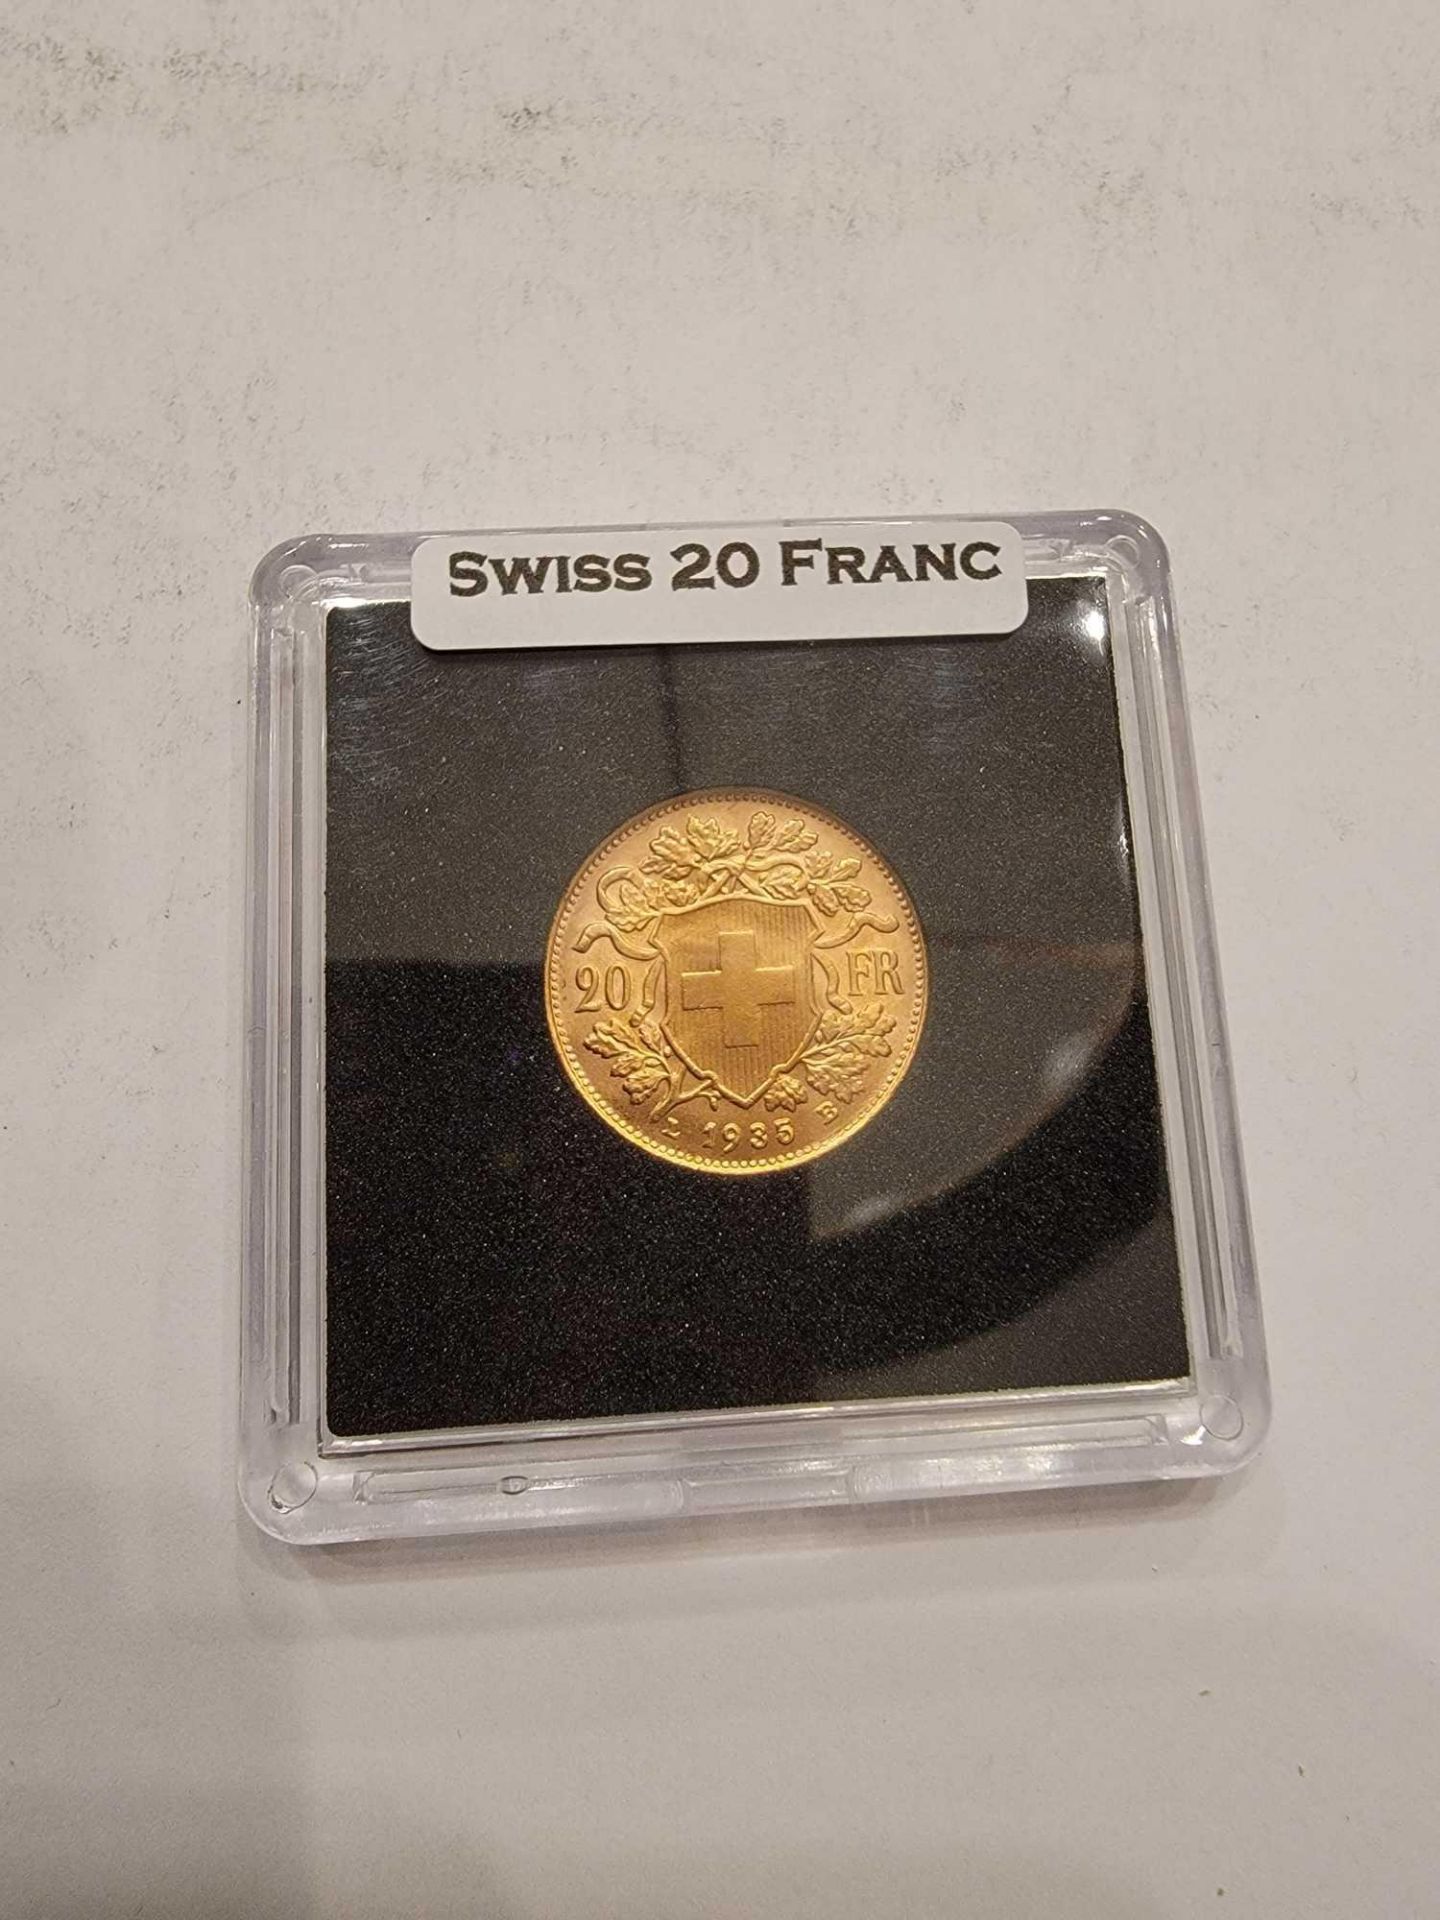 1935 gold Swiss 20 franc - Image 2 of 2